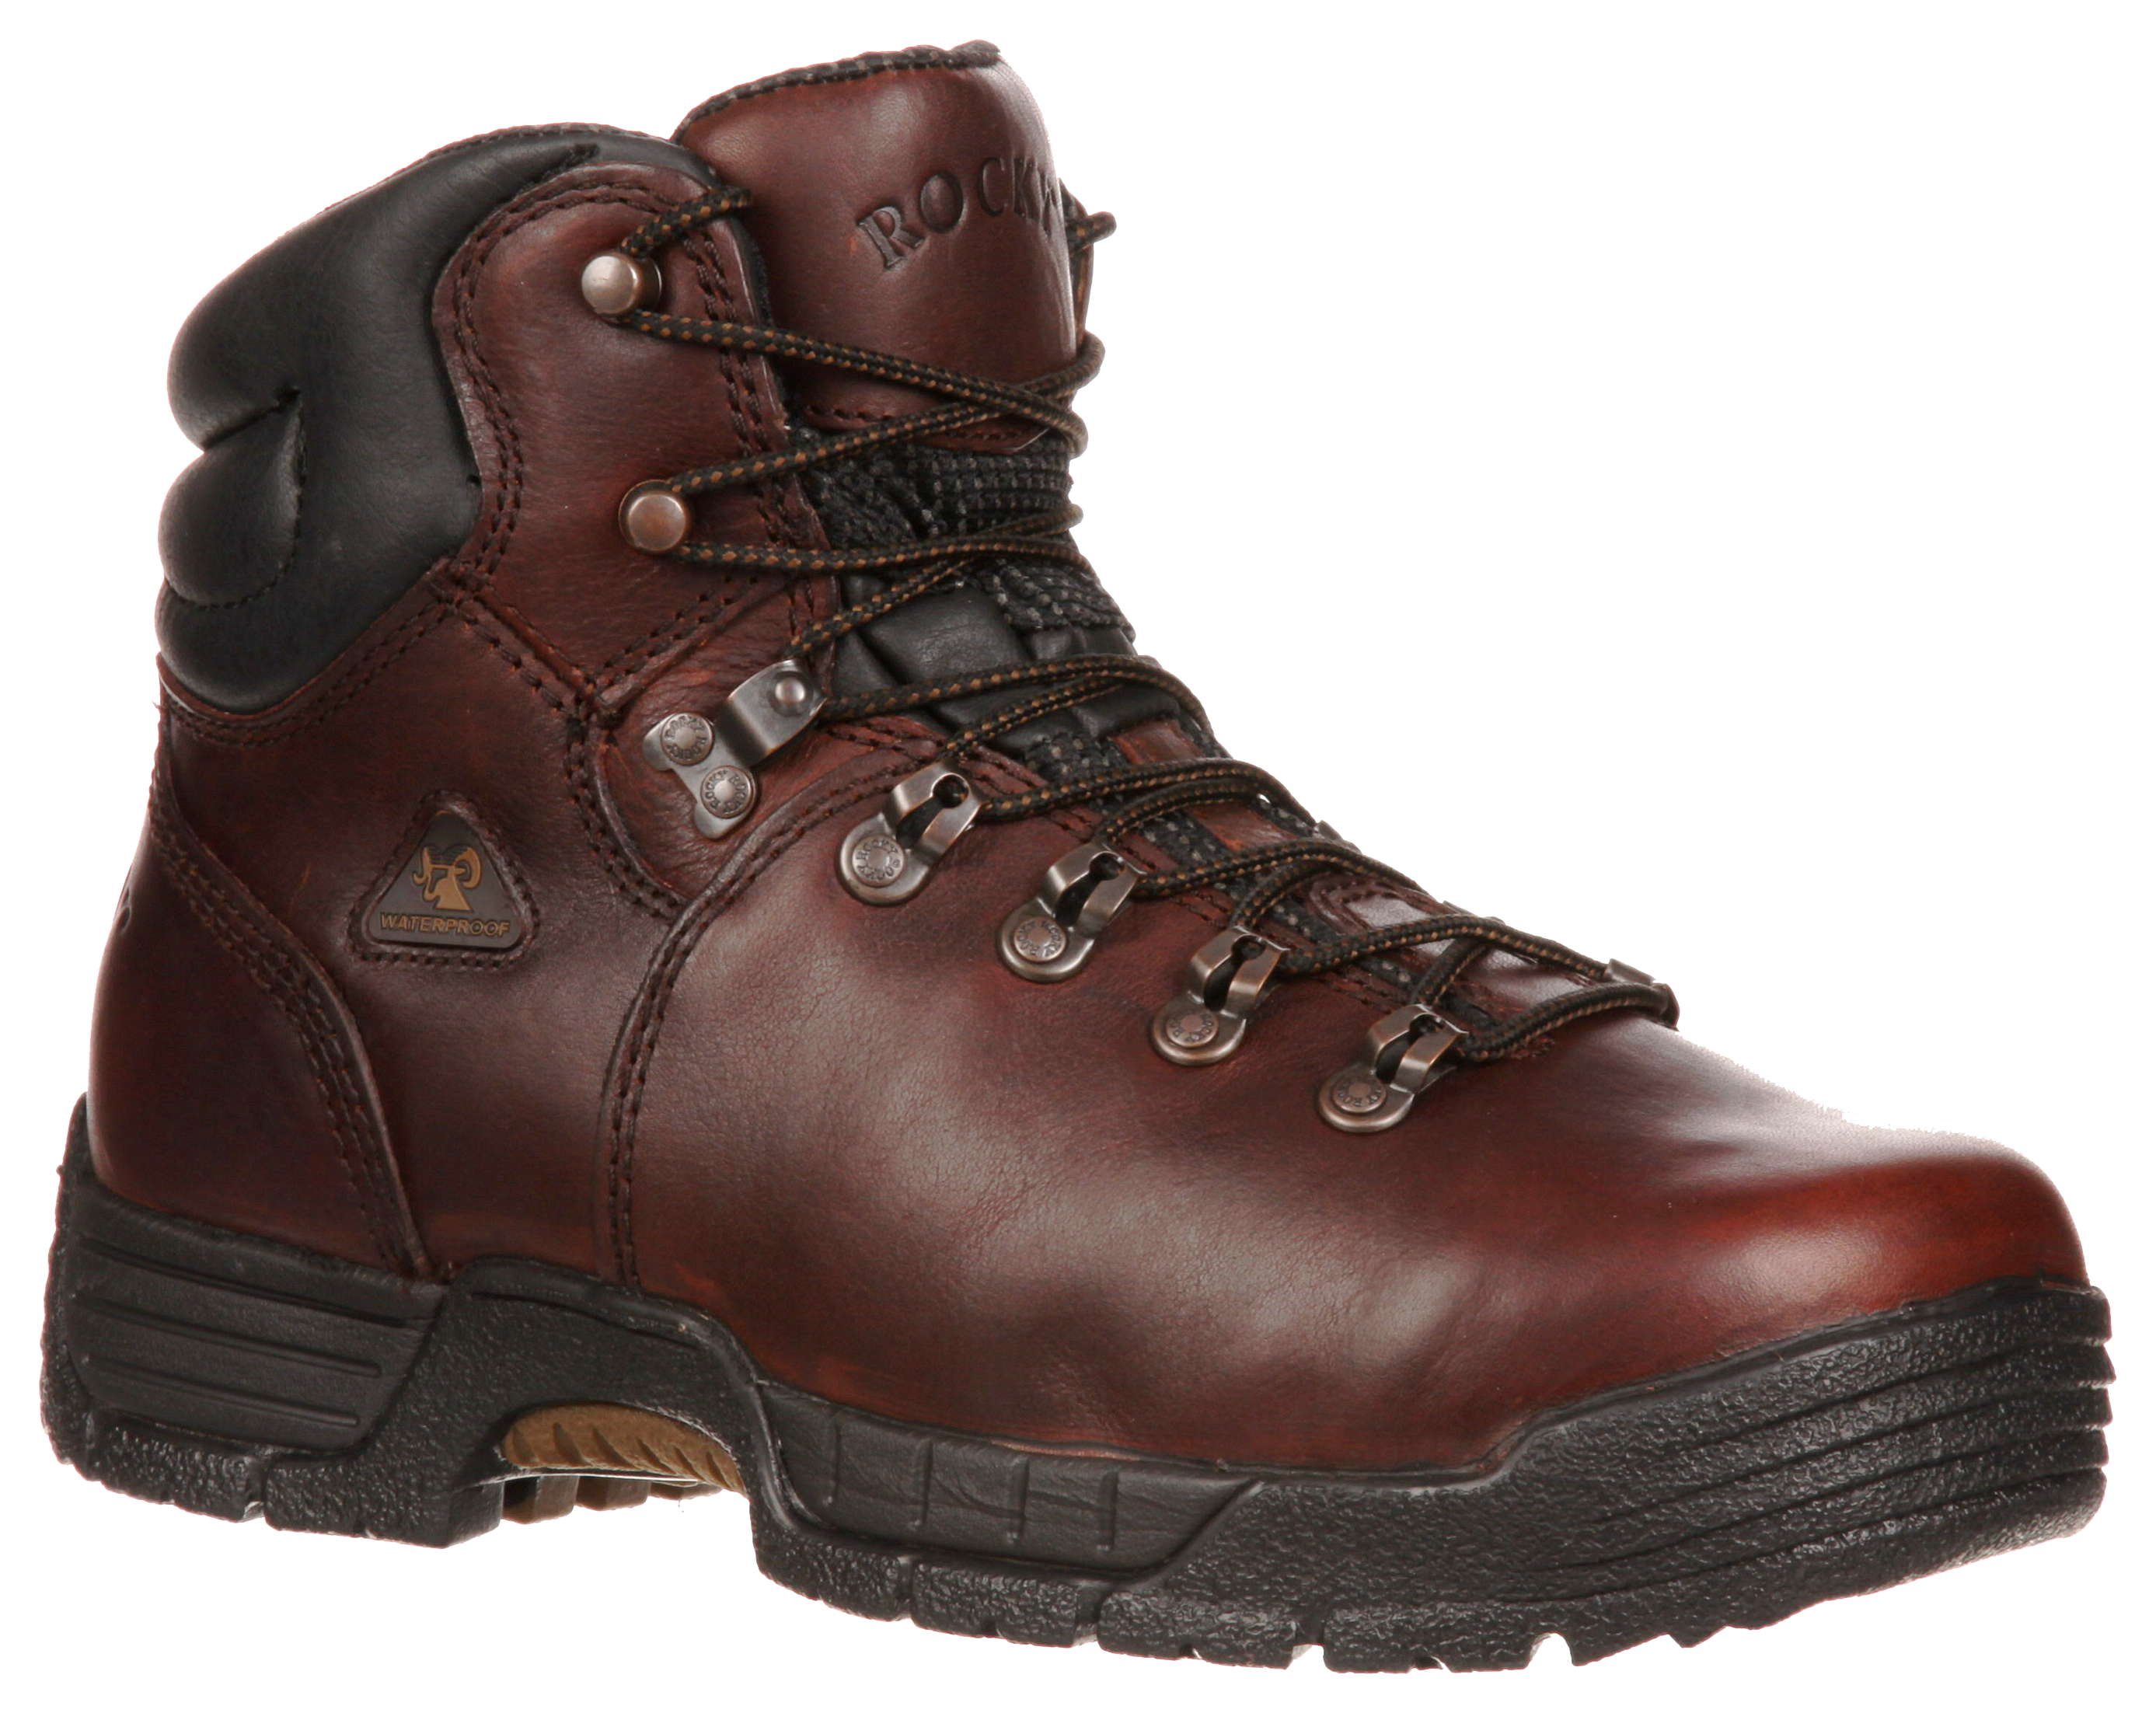 ROCKY MobiLite Waterproof Steel Toe Work Boots for Men - Brown - 12 M